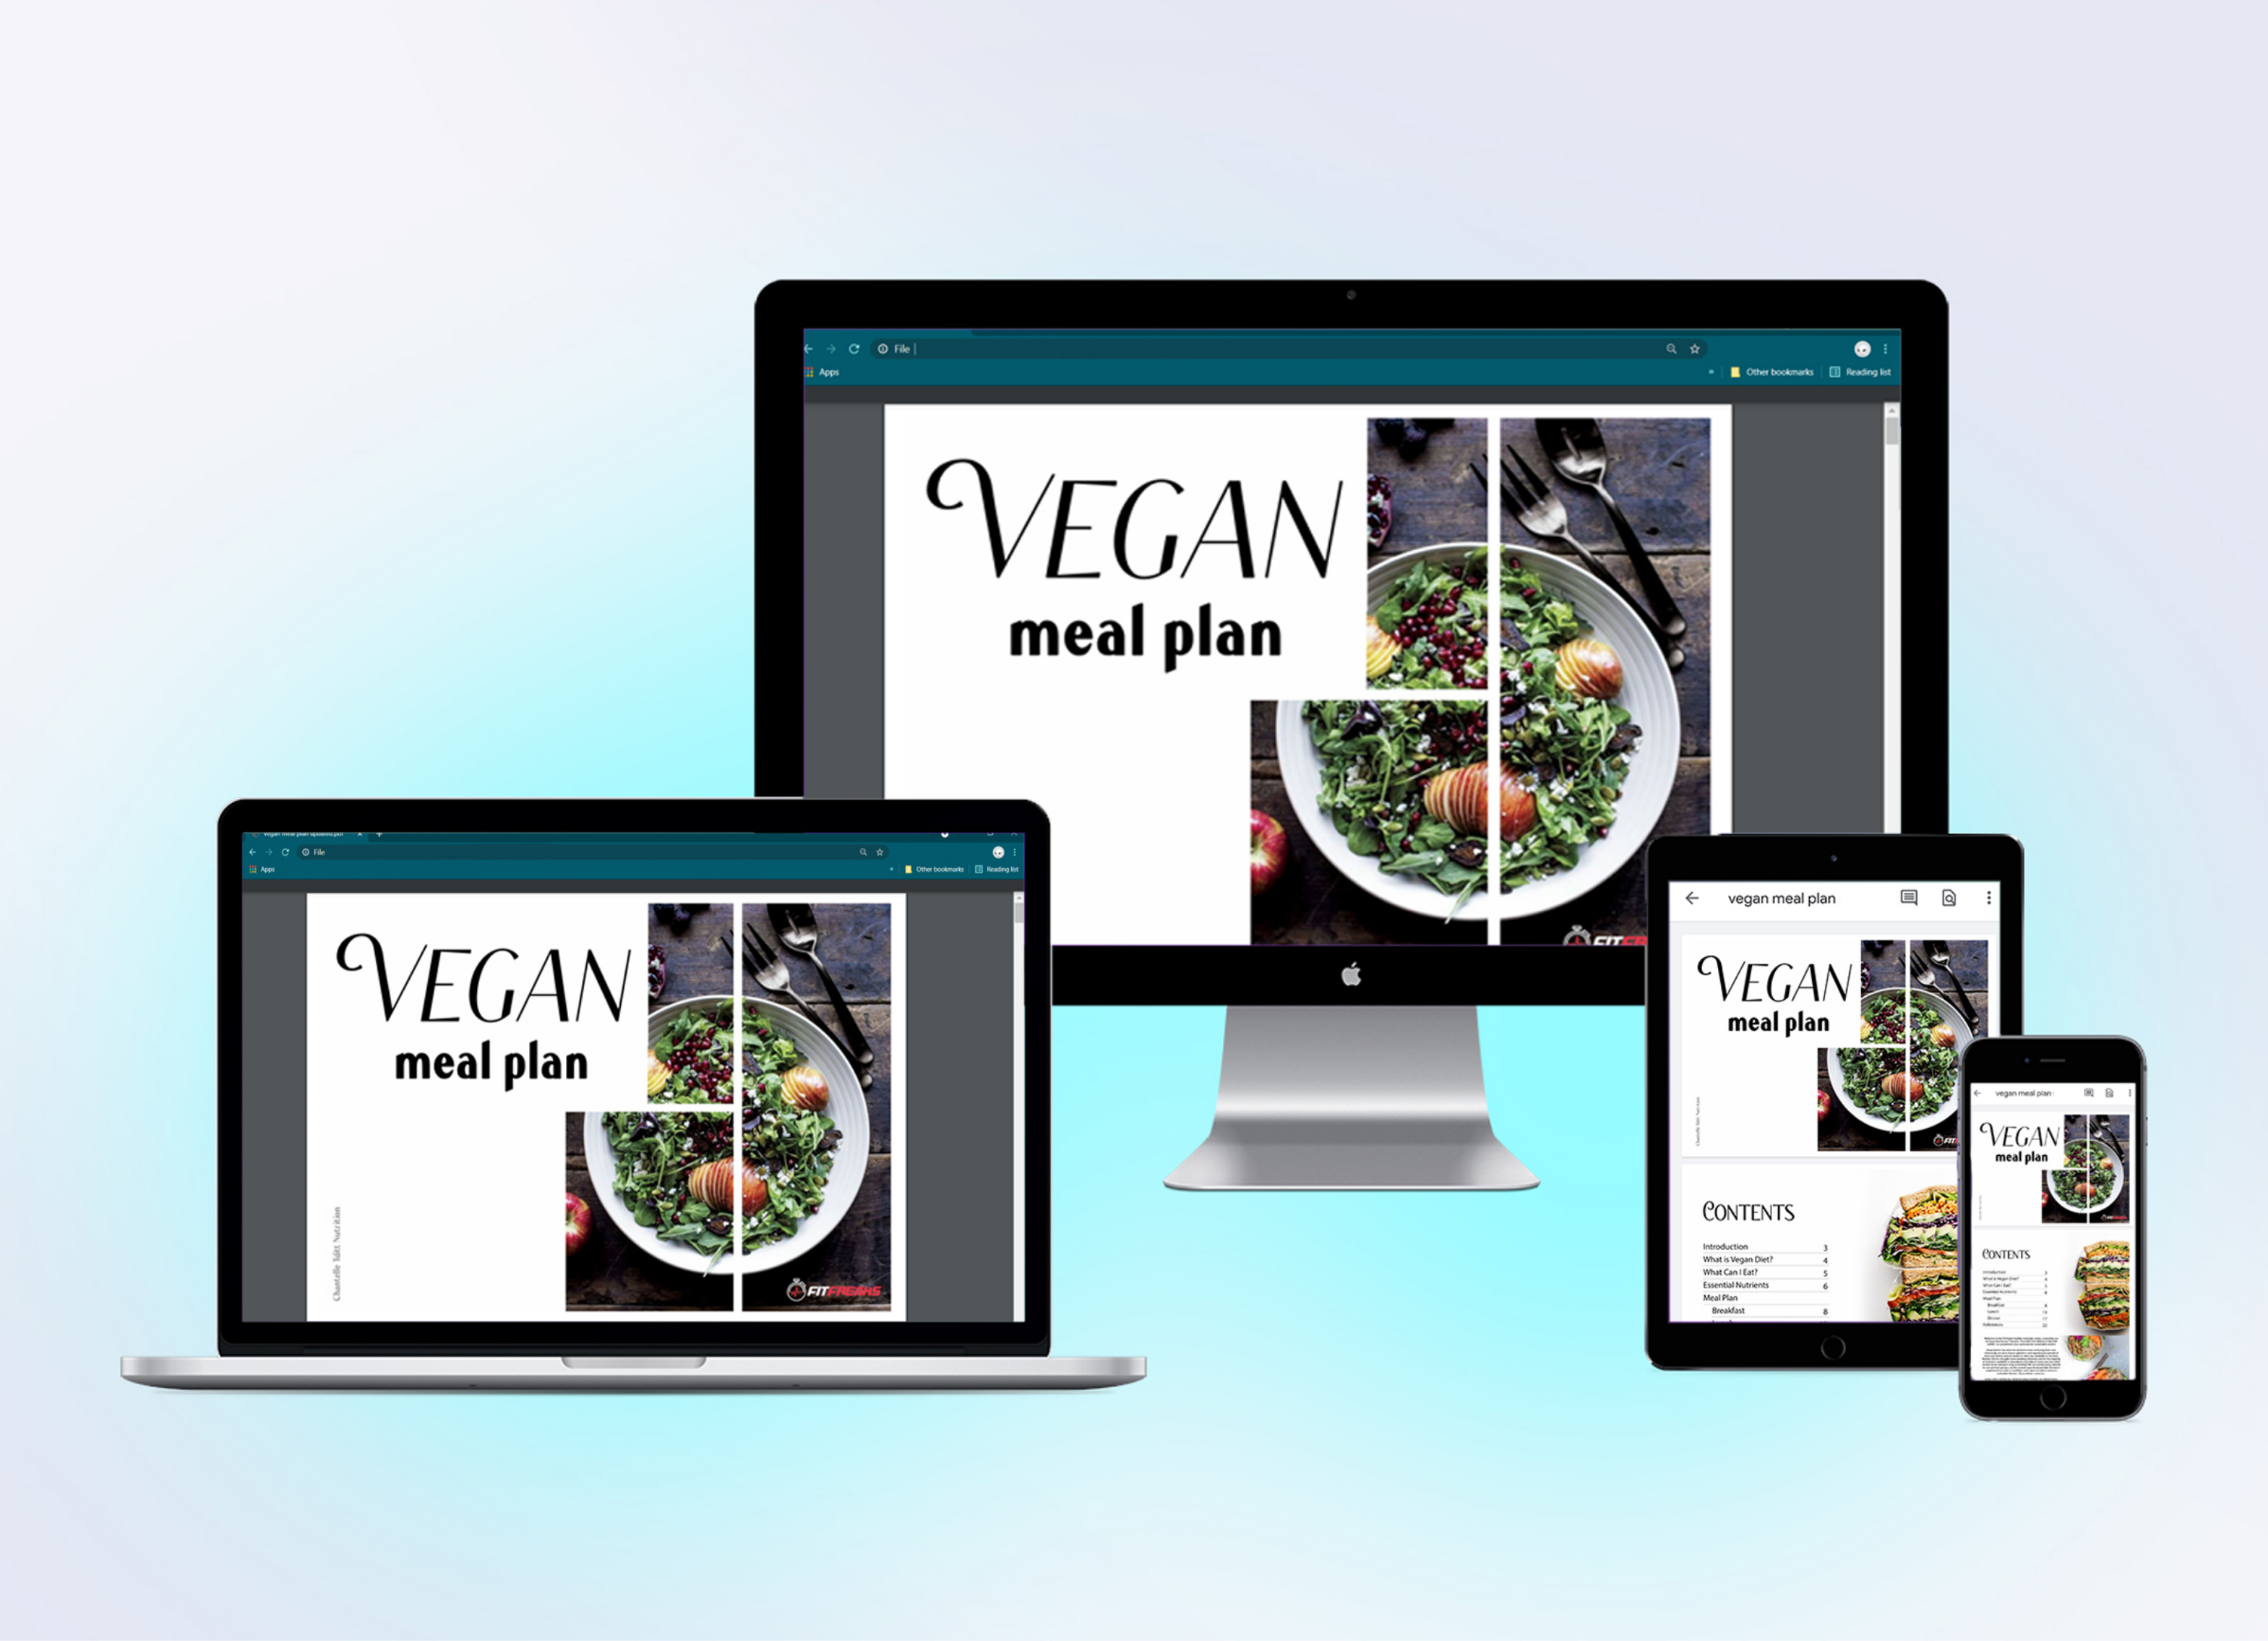 Get your free vegan meal plan now!